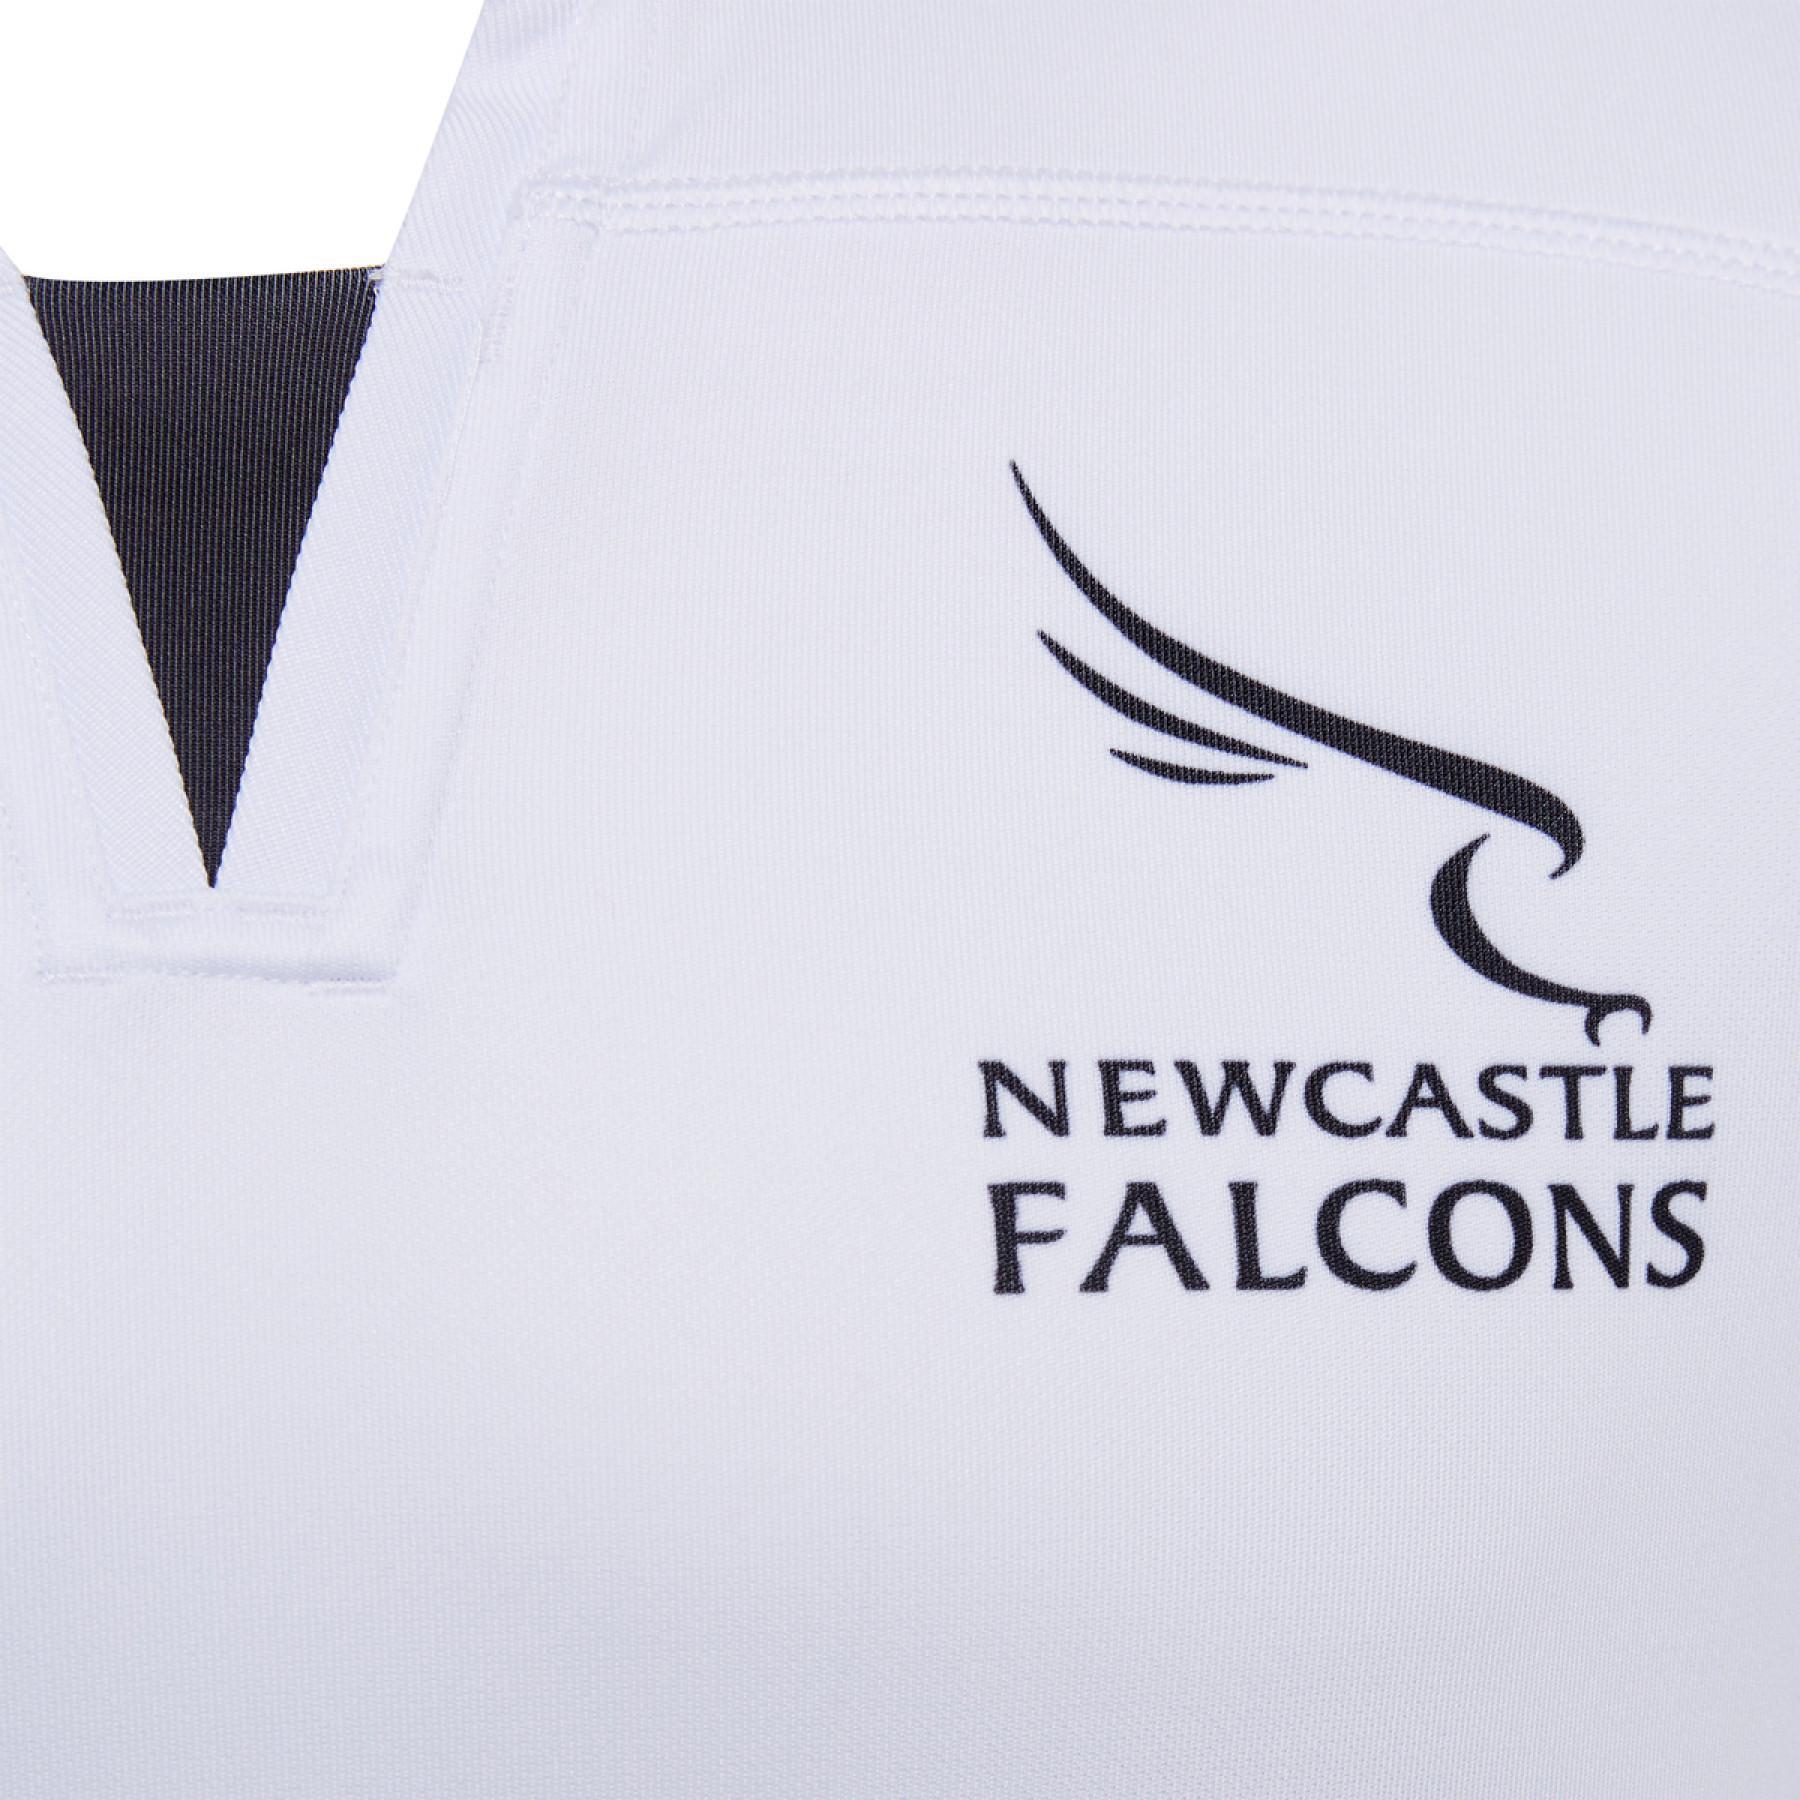 Trikot für draußen Newcastle falcons 2020/21